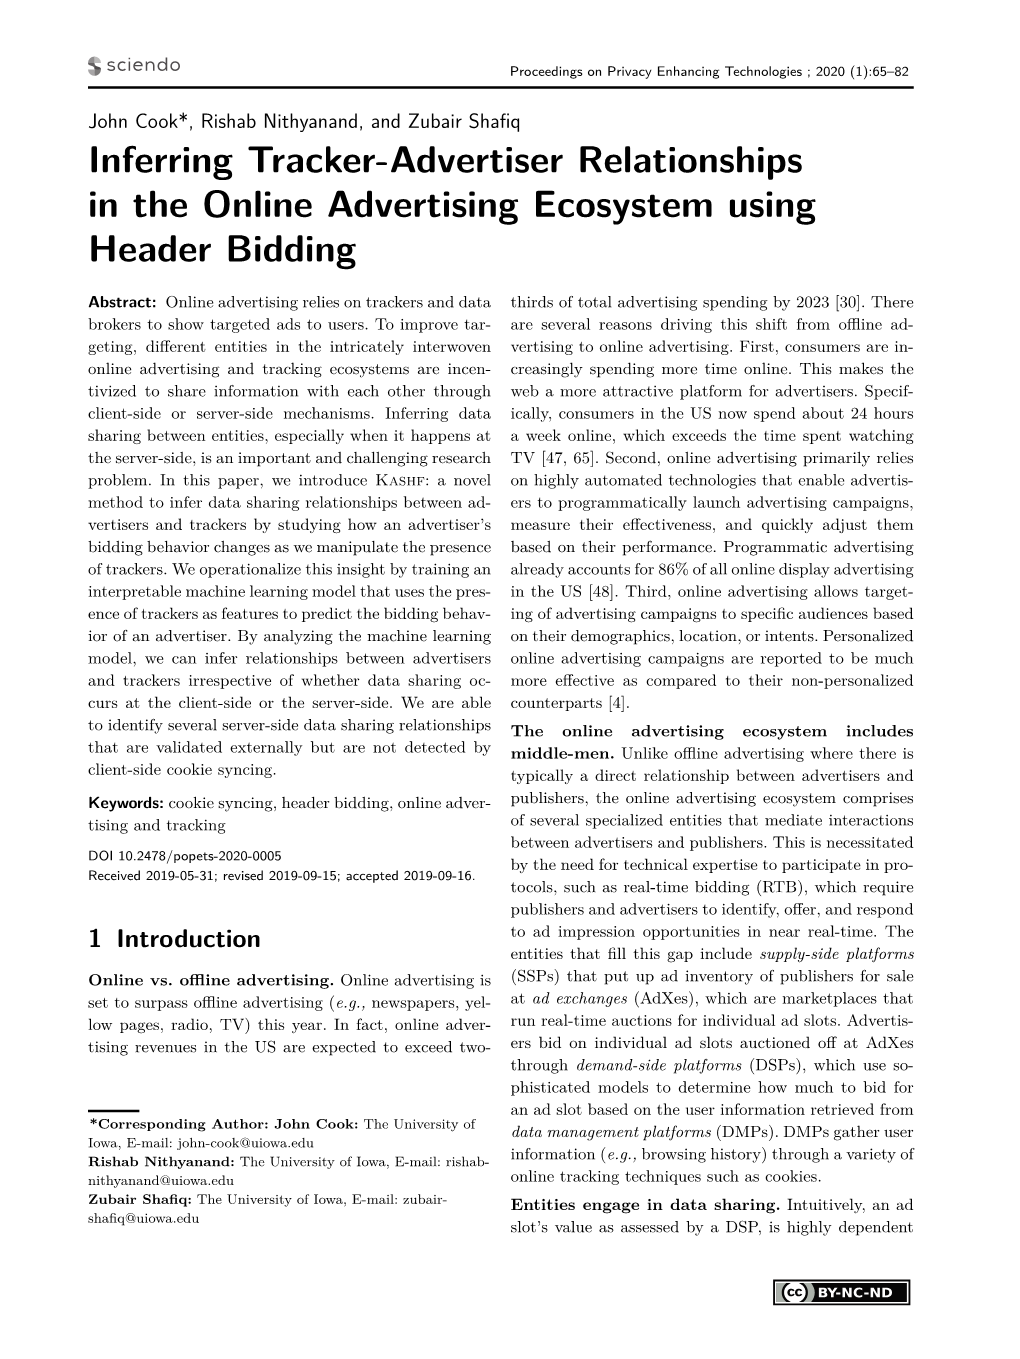 Inferring Tracker-Advertiser Relationships in the Online Advertising Ecosystem Using Header Bidding